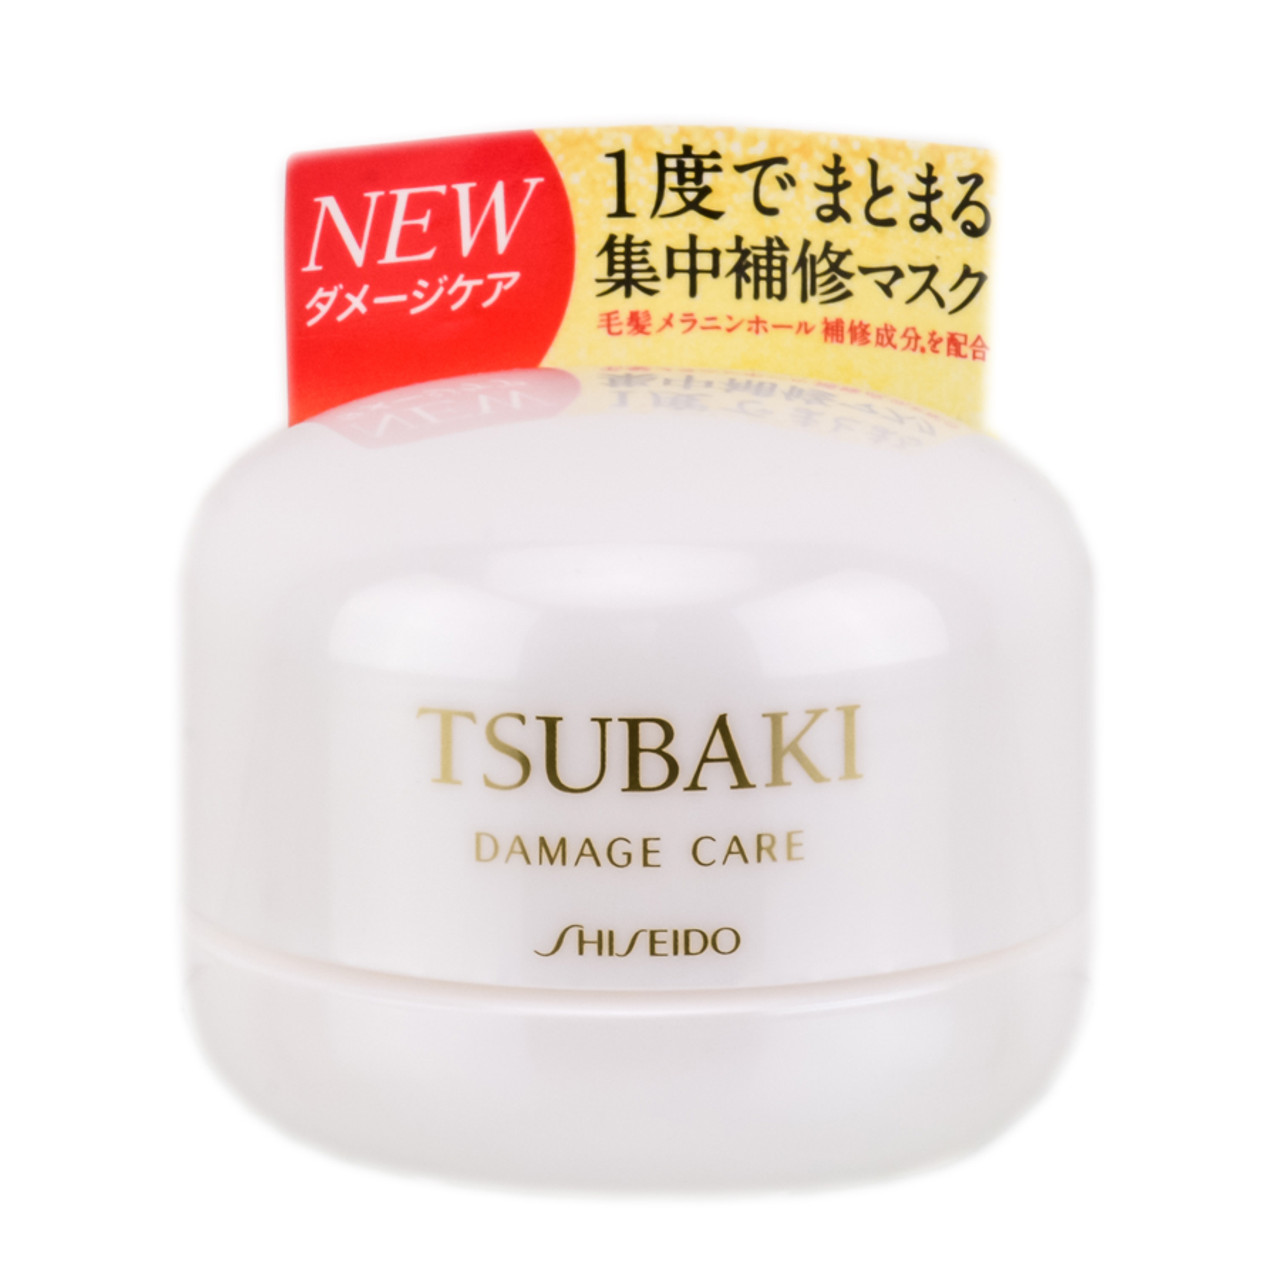 Shiseido Tsubaki Damage Care Hair Mask - SleekShop.com (formerly Sleekhair)